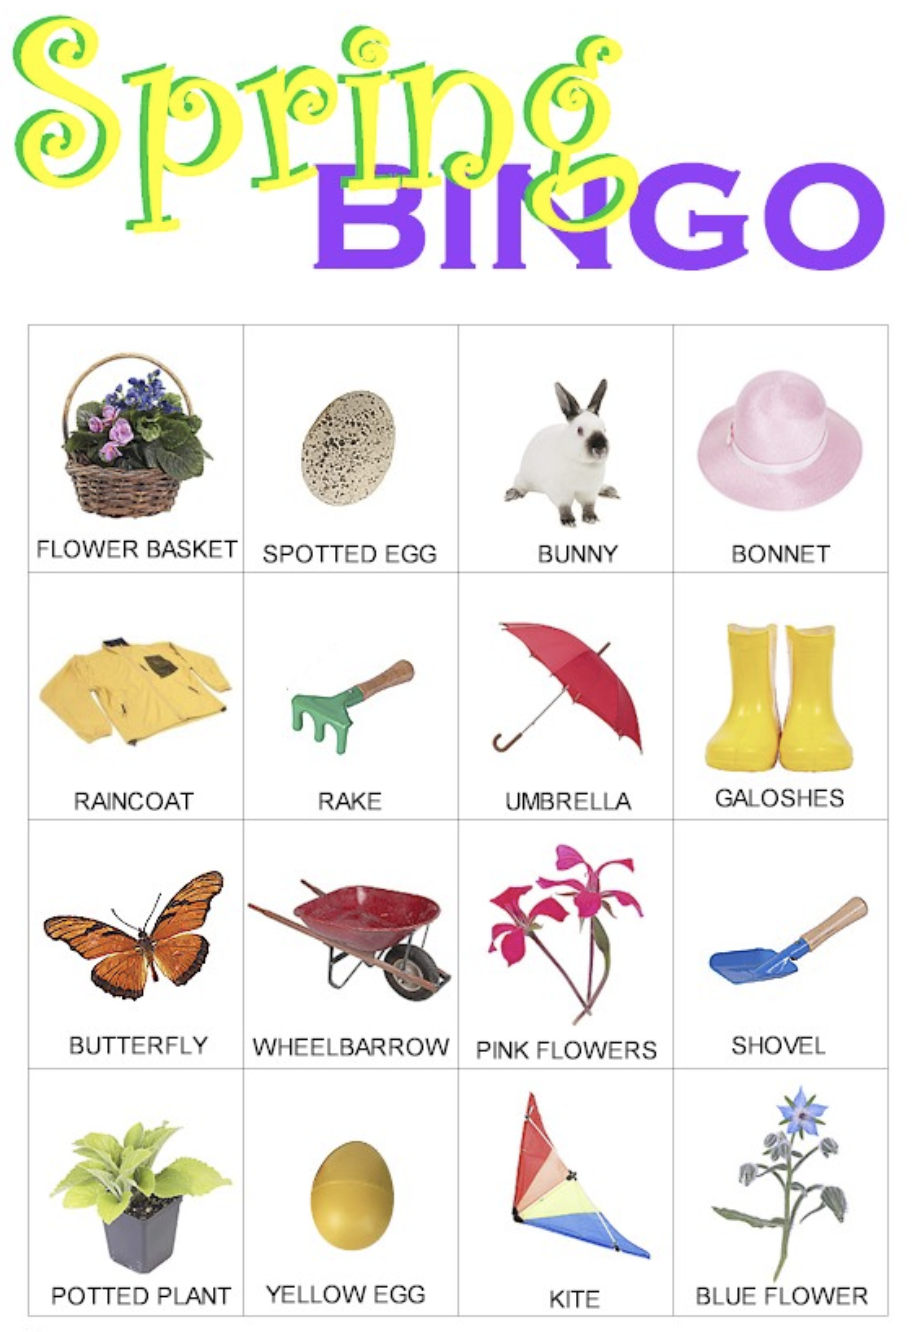 Spring Bingo : vocabulaire du printemps.